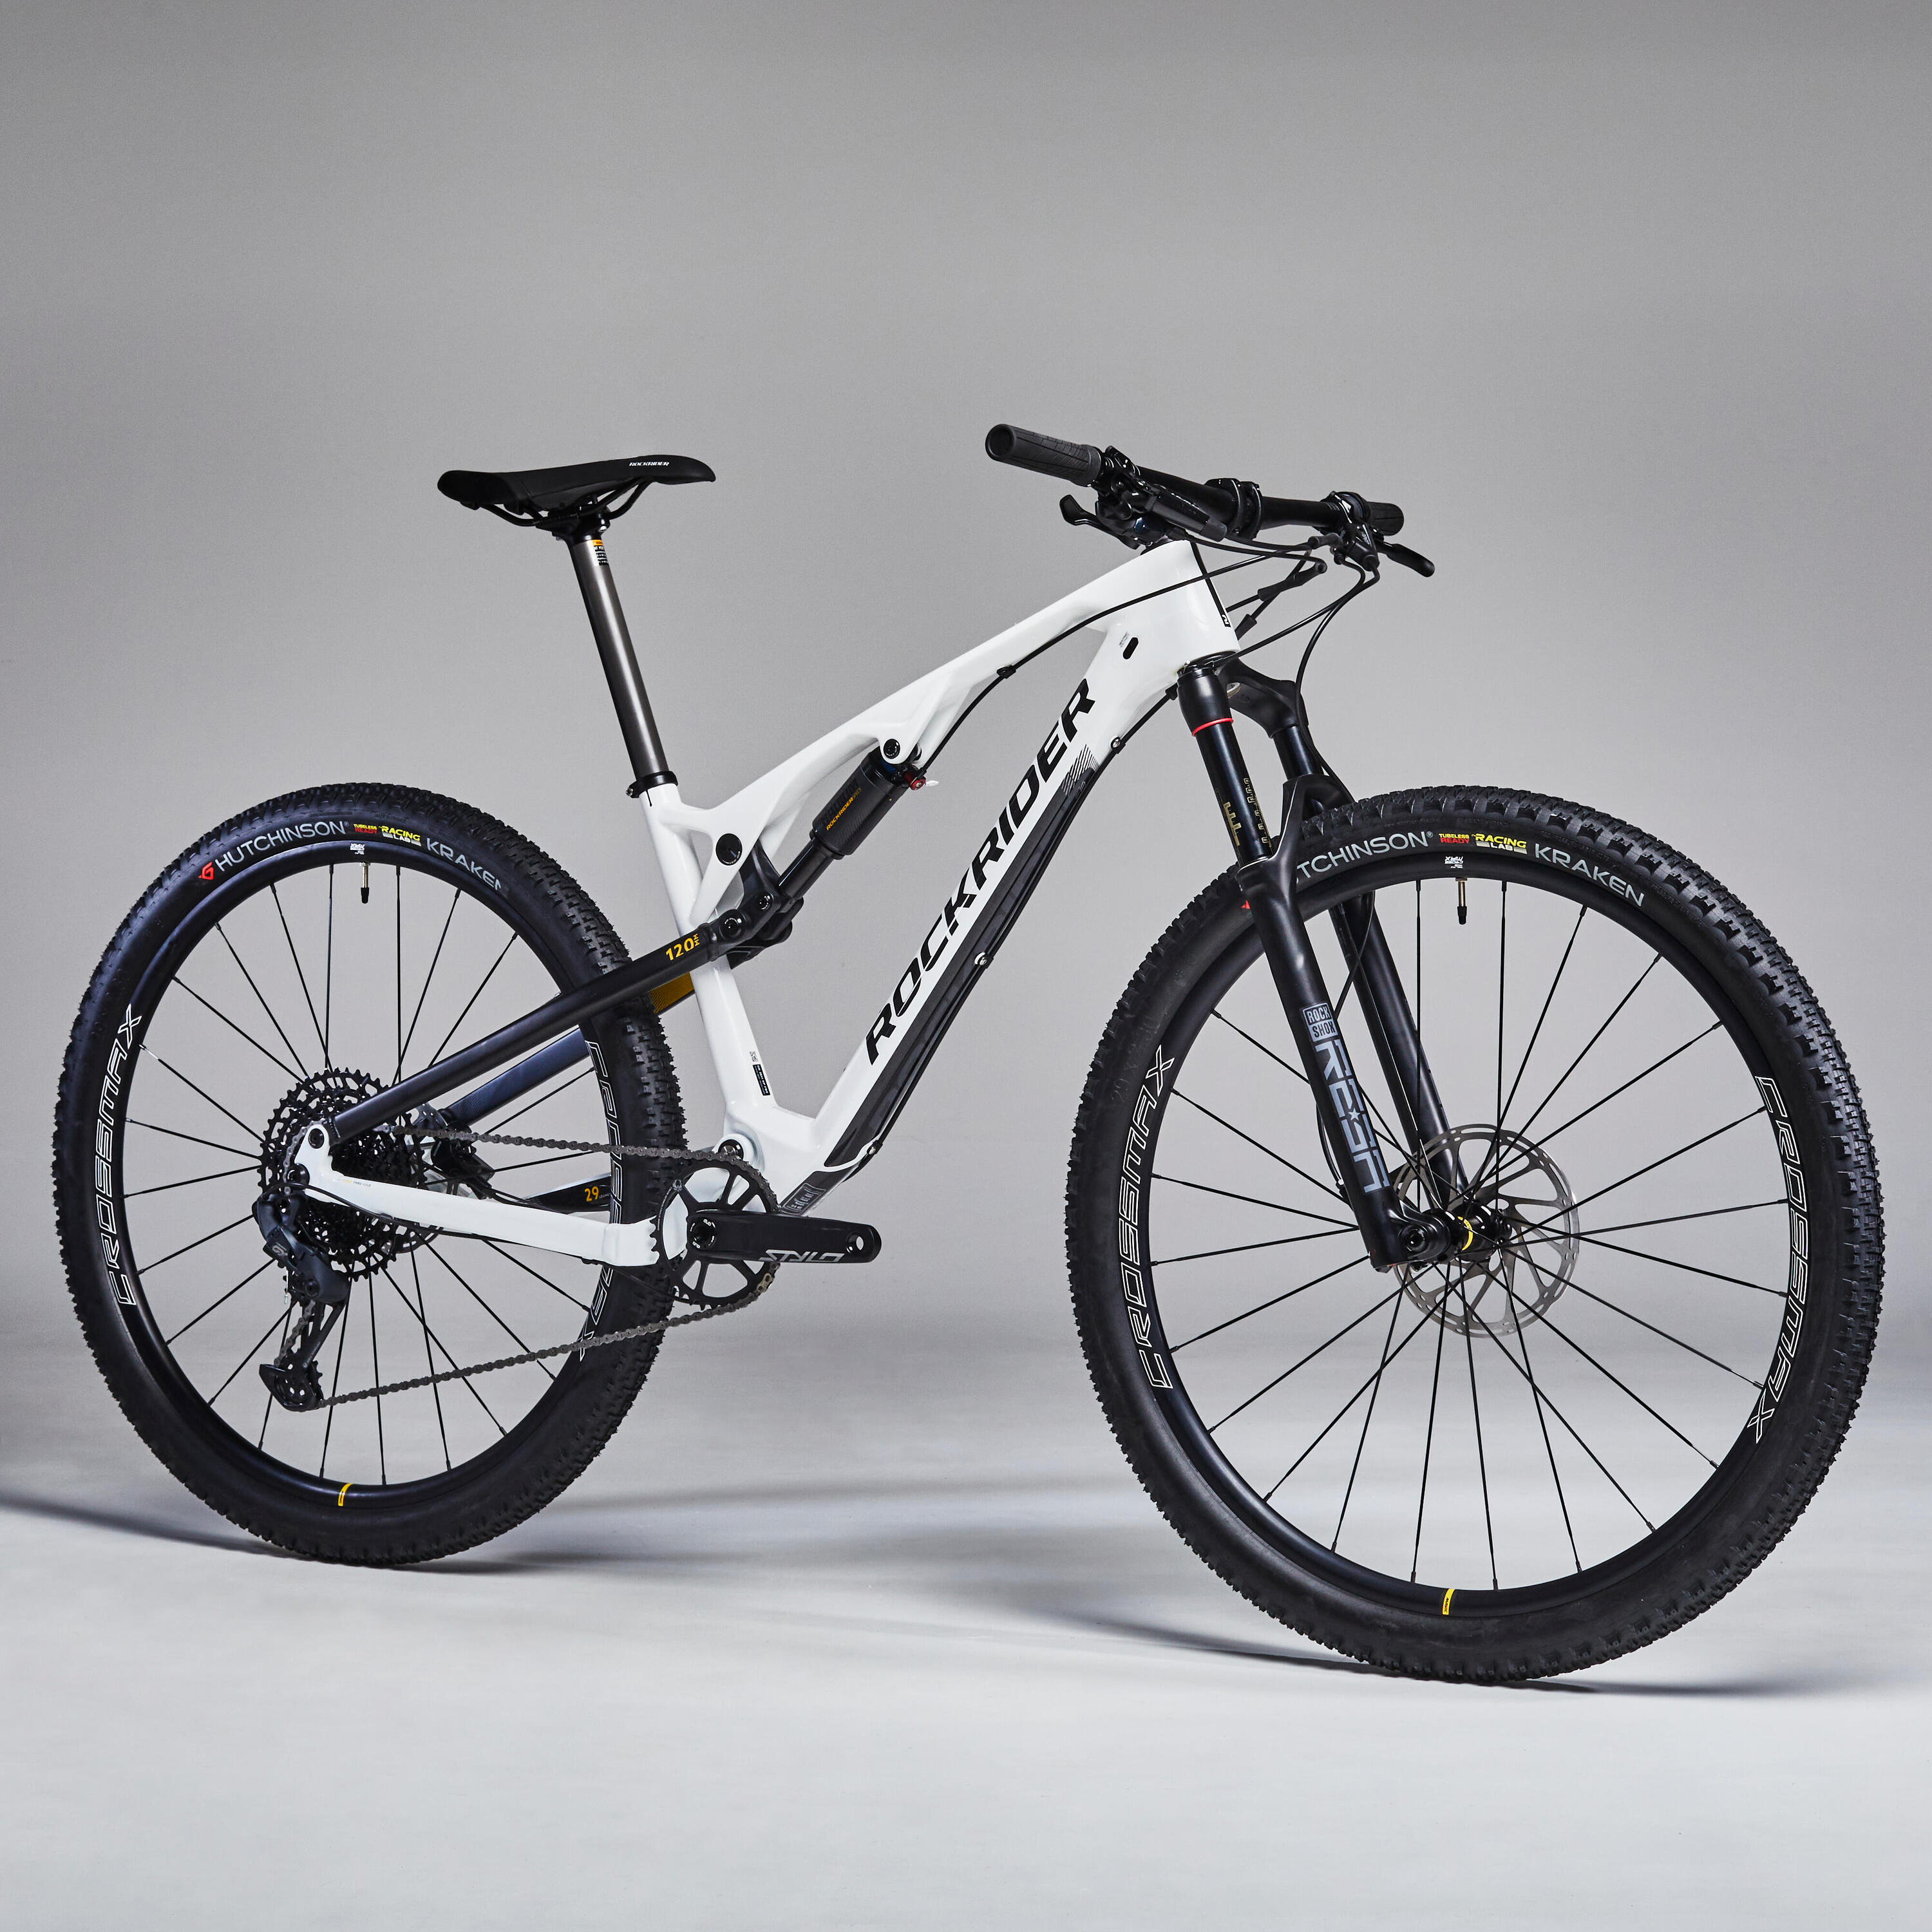 29 inch Full Suspension Carbon Mountain Bike rockrider XC 900 - white 2/13